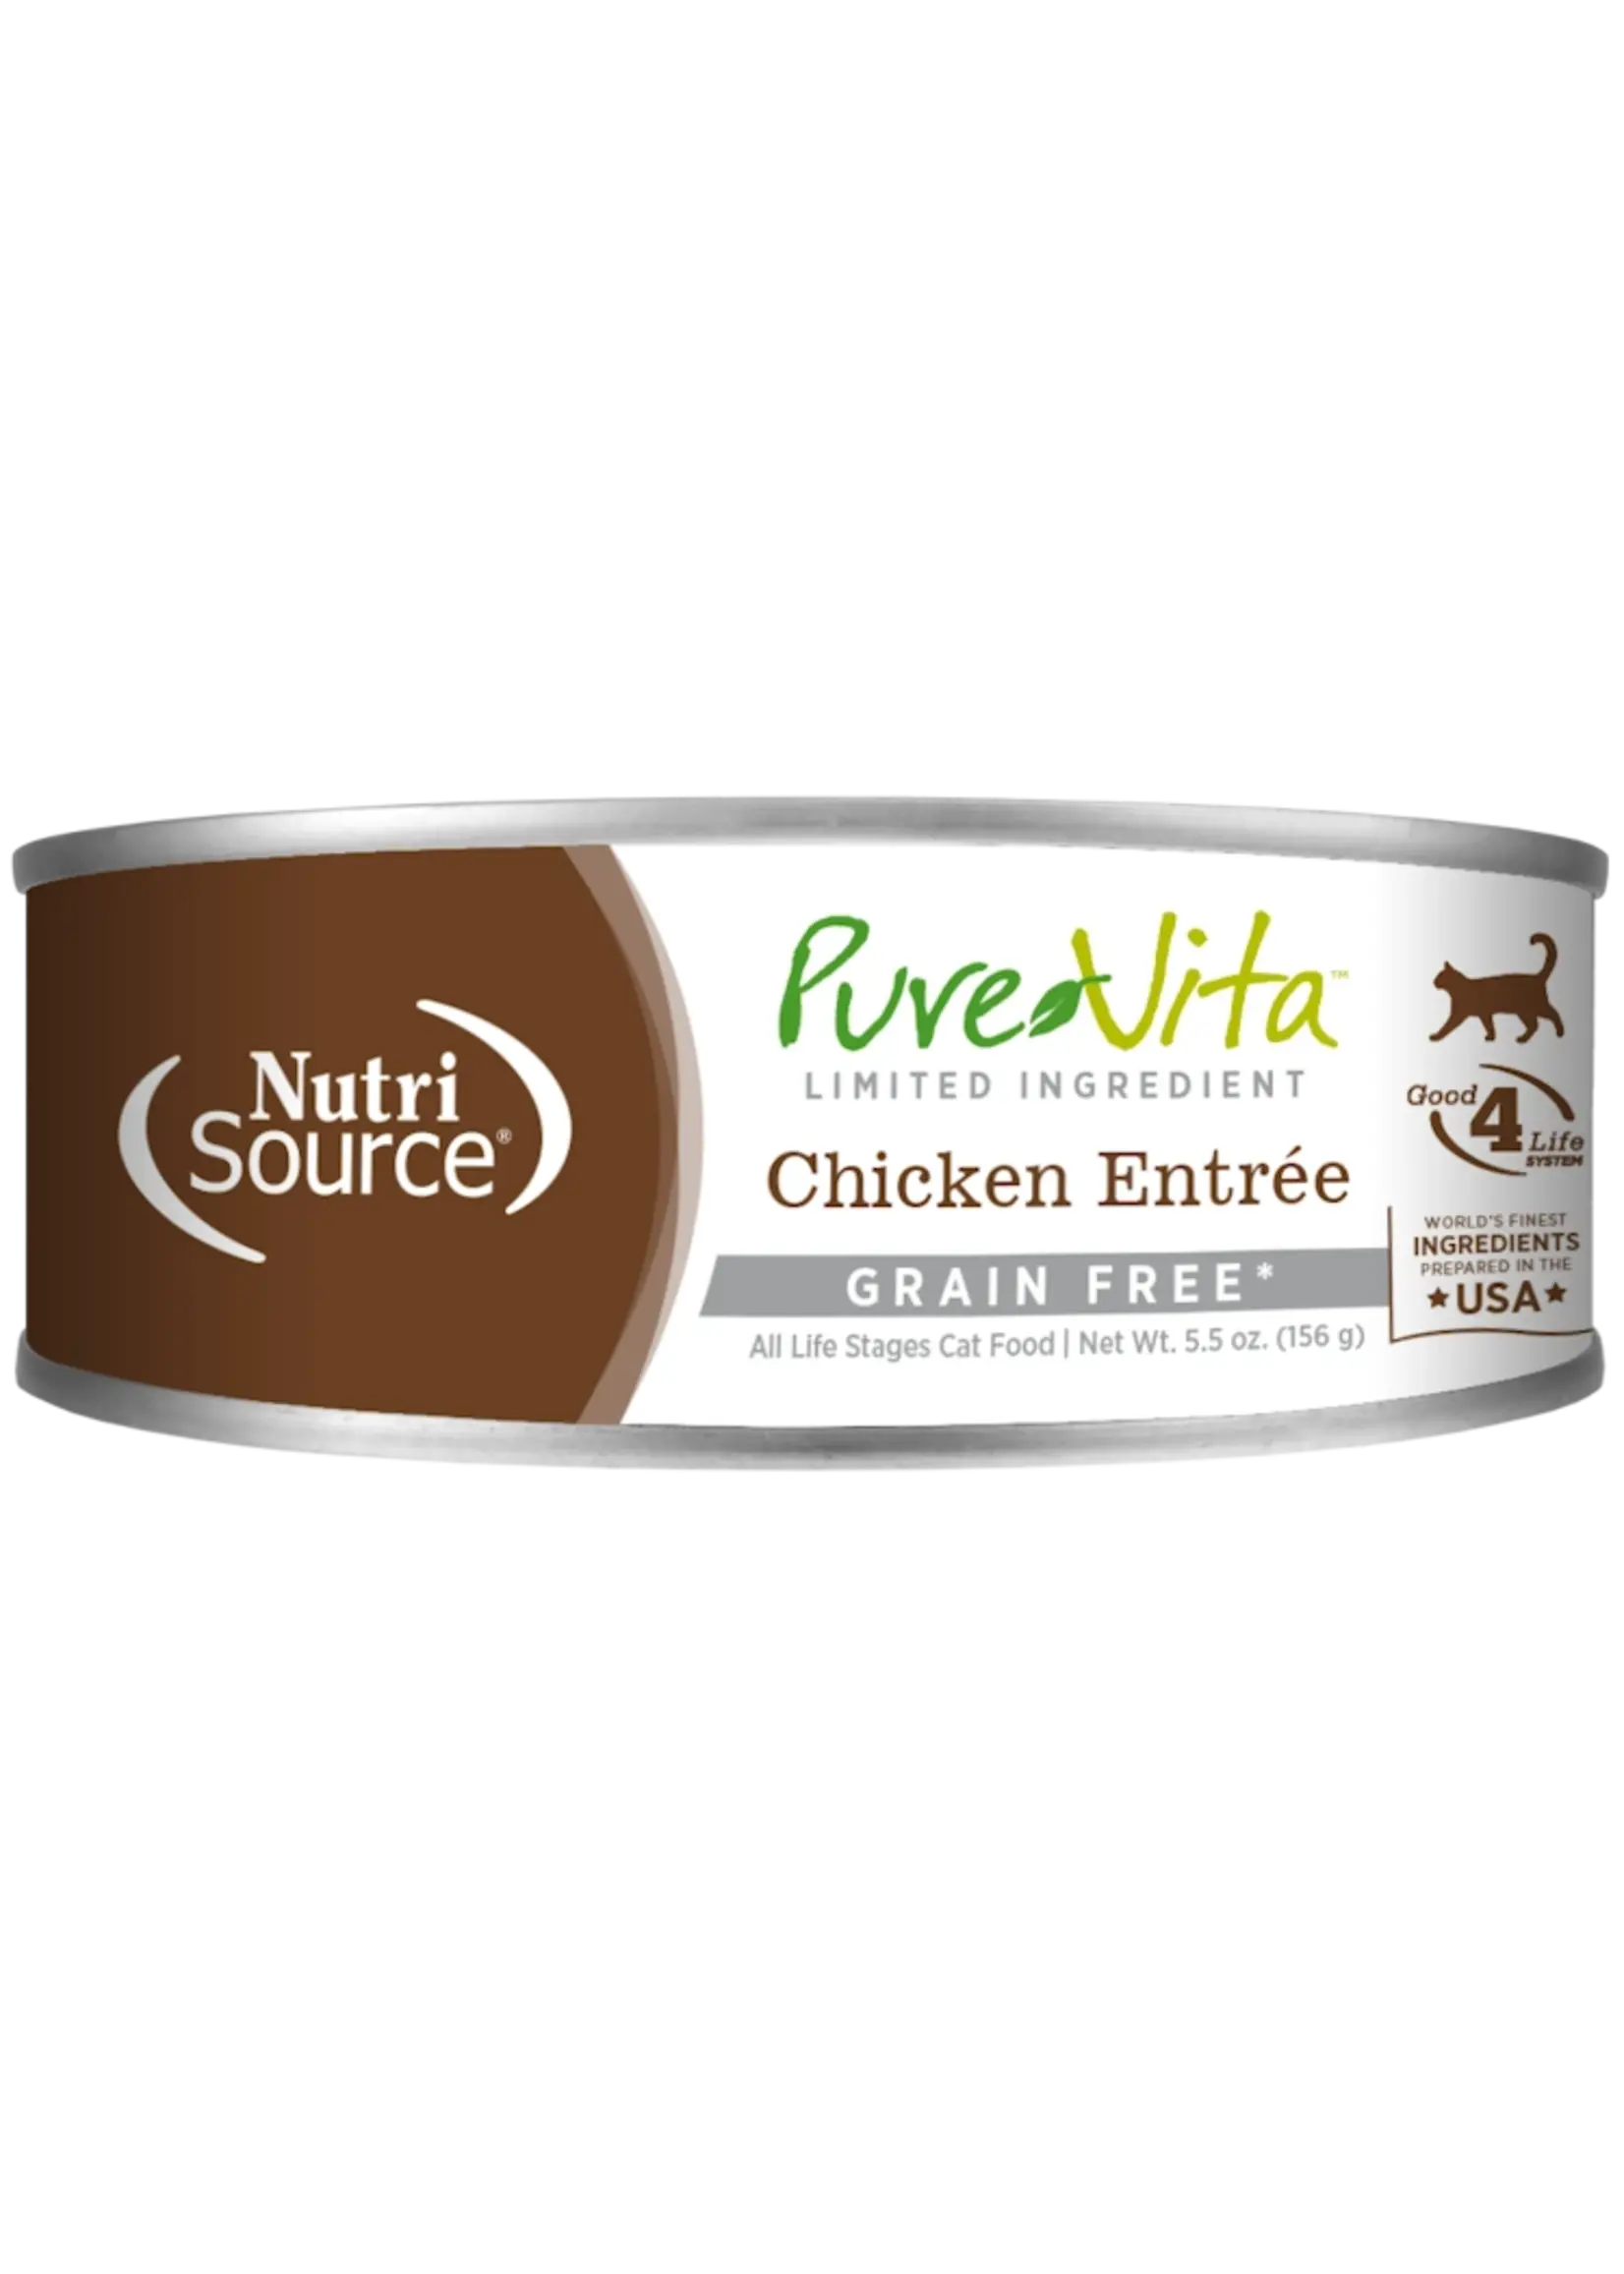 NutriSource NutriSource PureVita Grain Free Chicken Entree Cat Food, 5.5oz Can